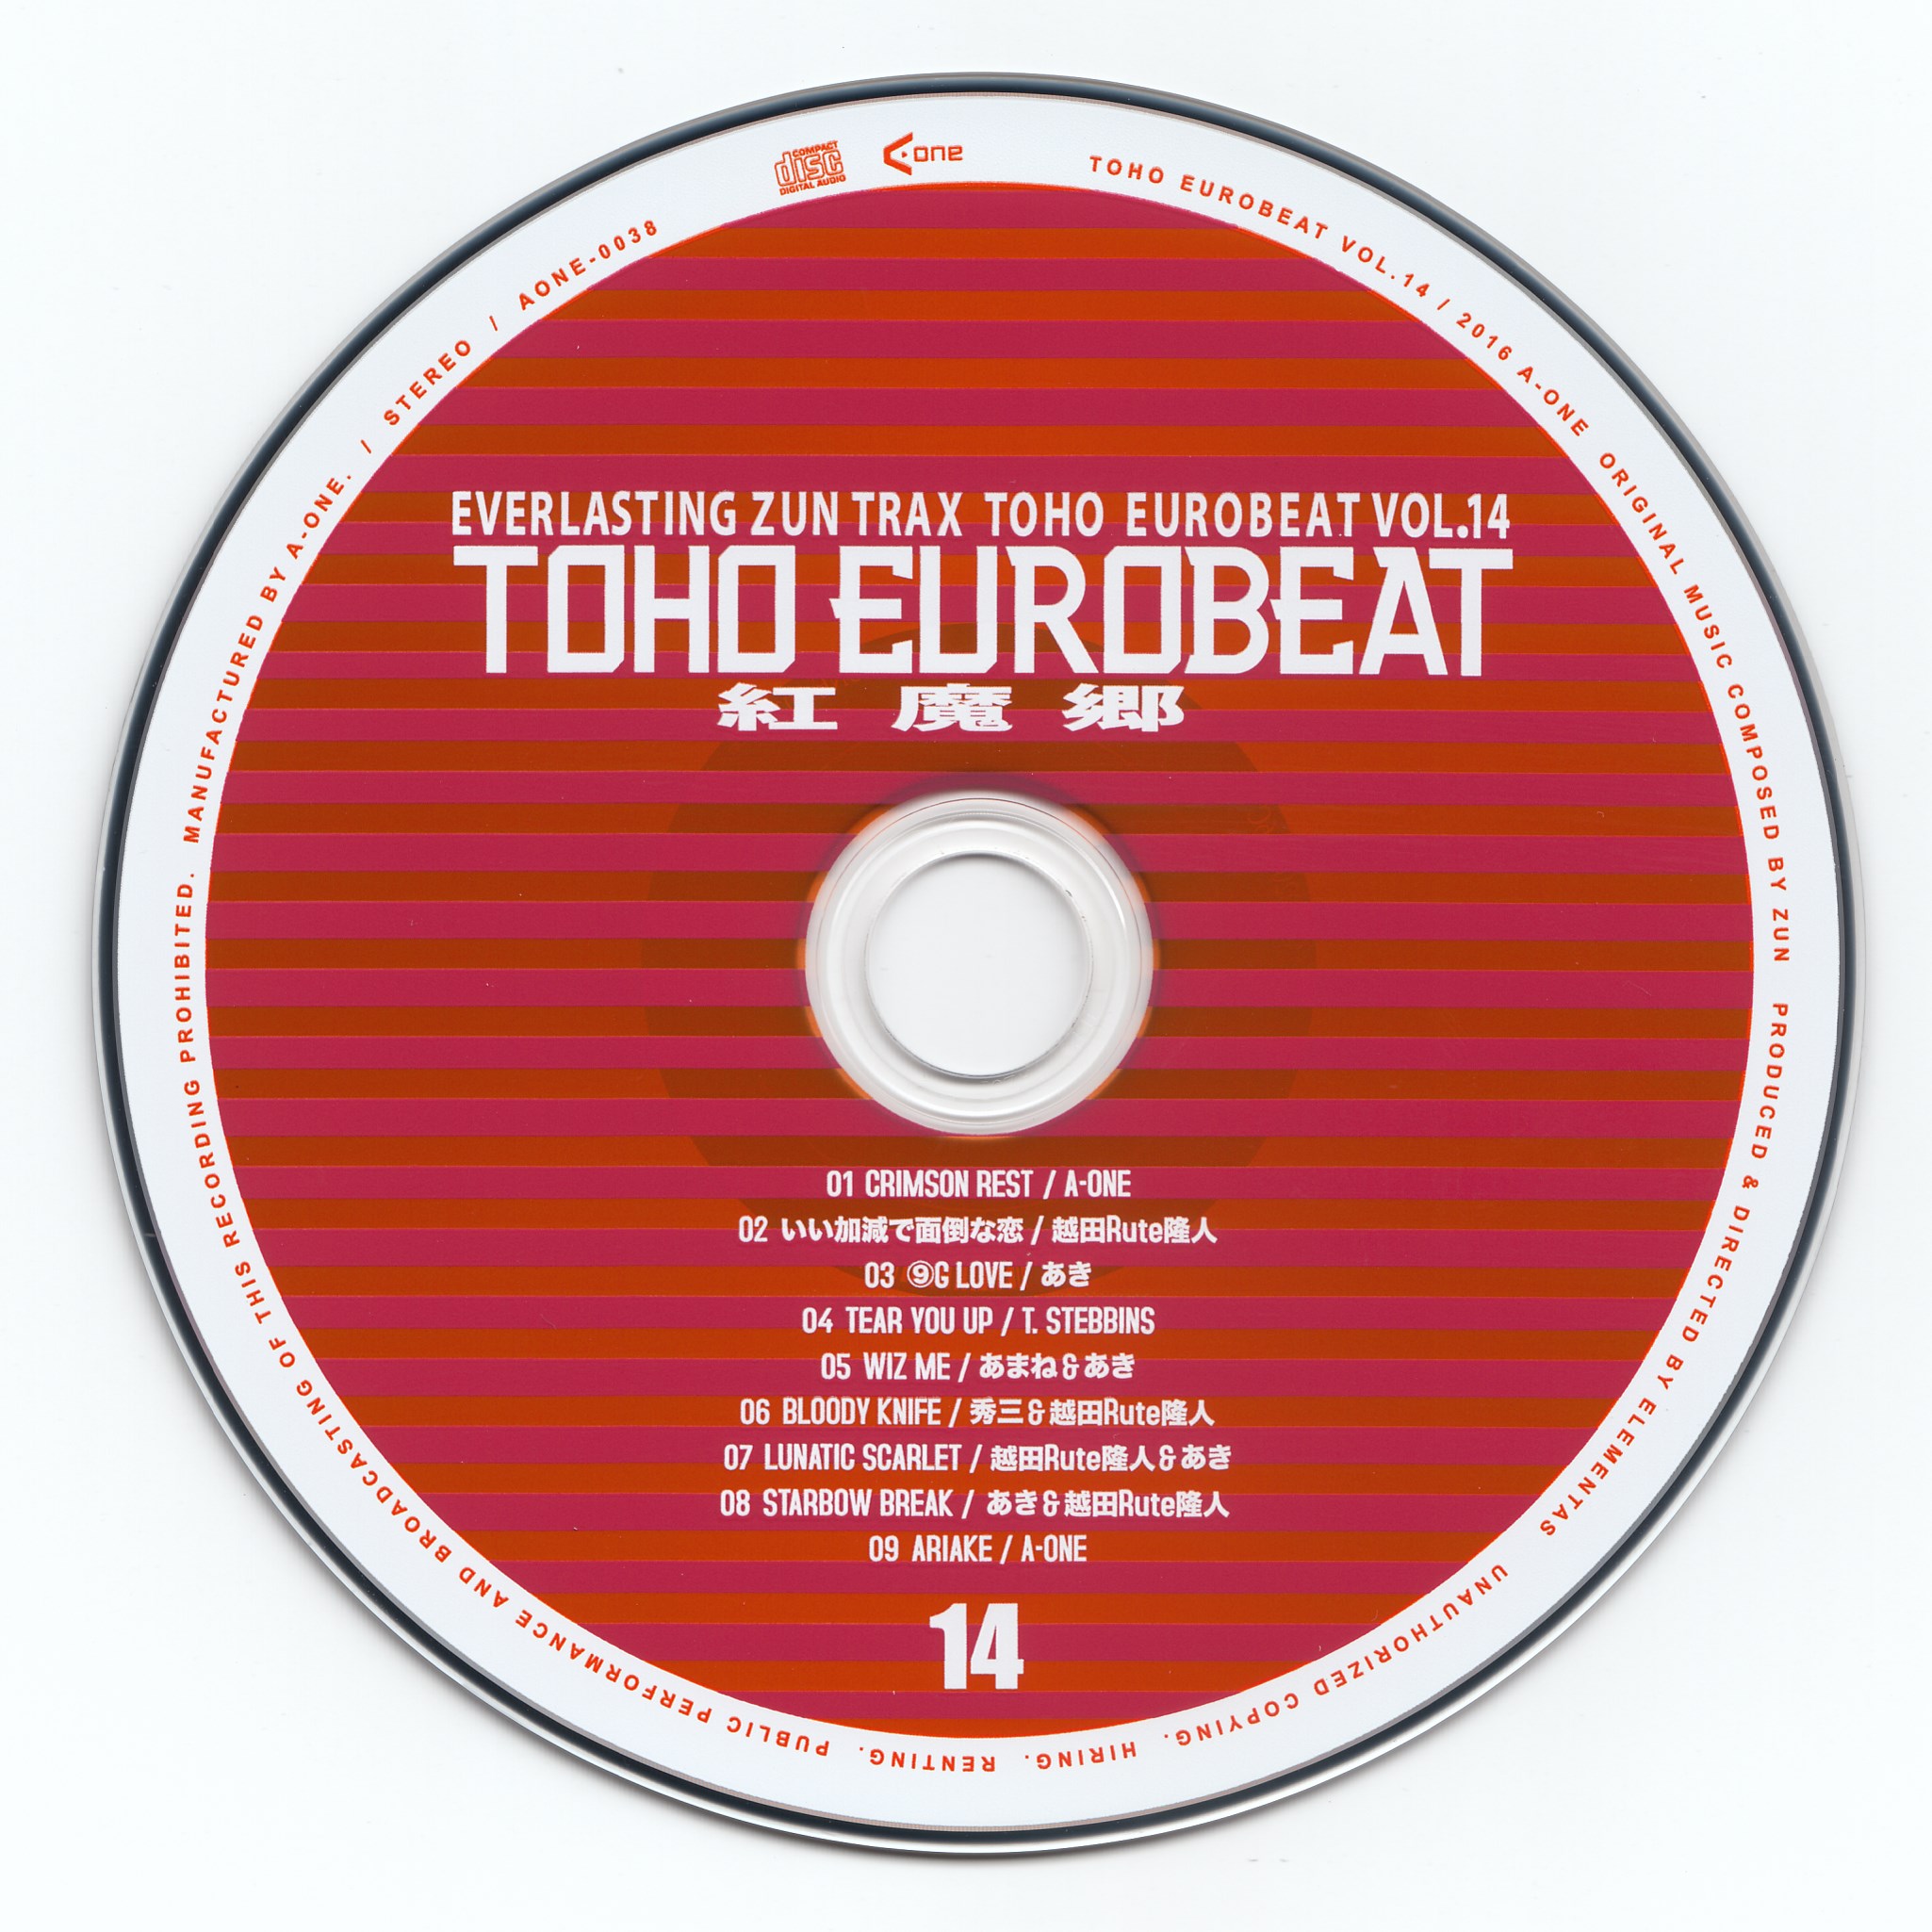 Stream Takumi  Listen to eurobeat playlist online for free on